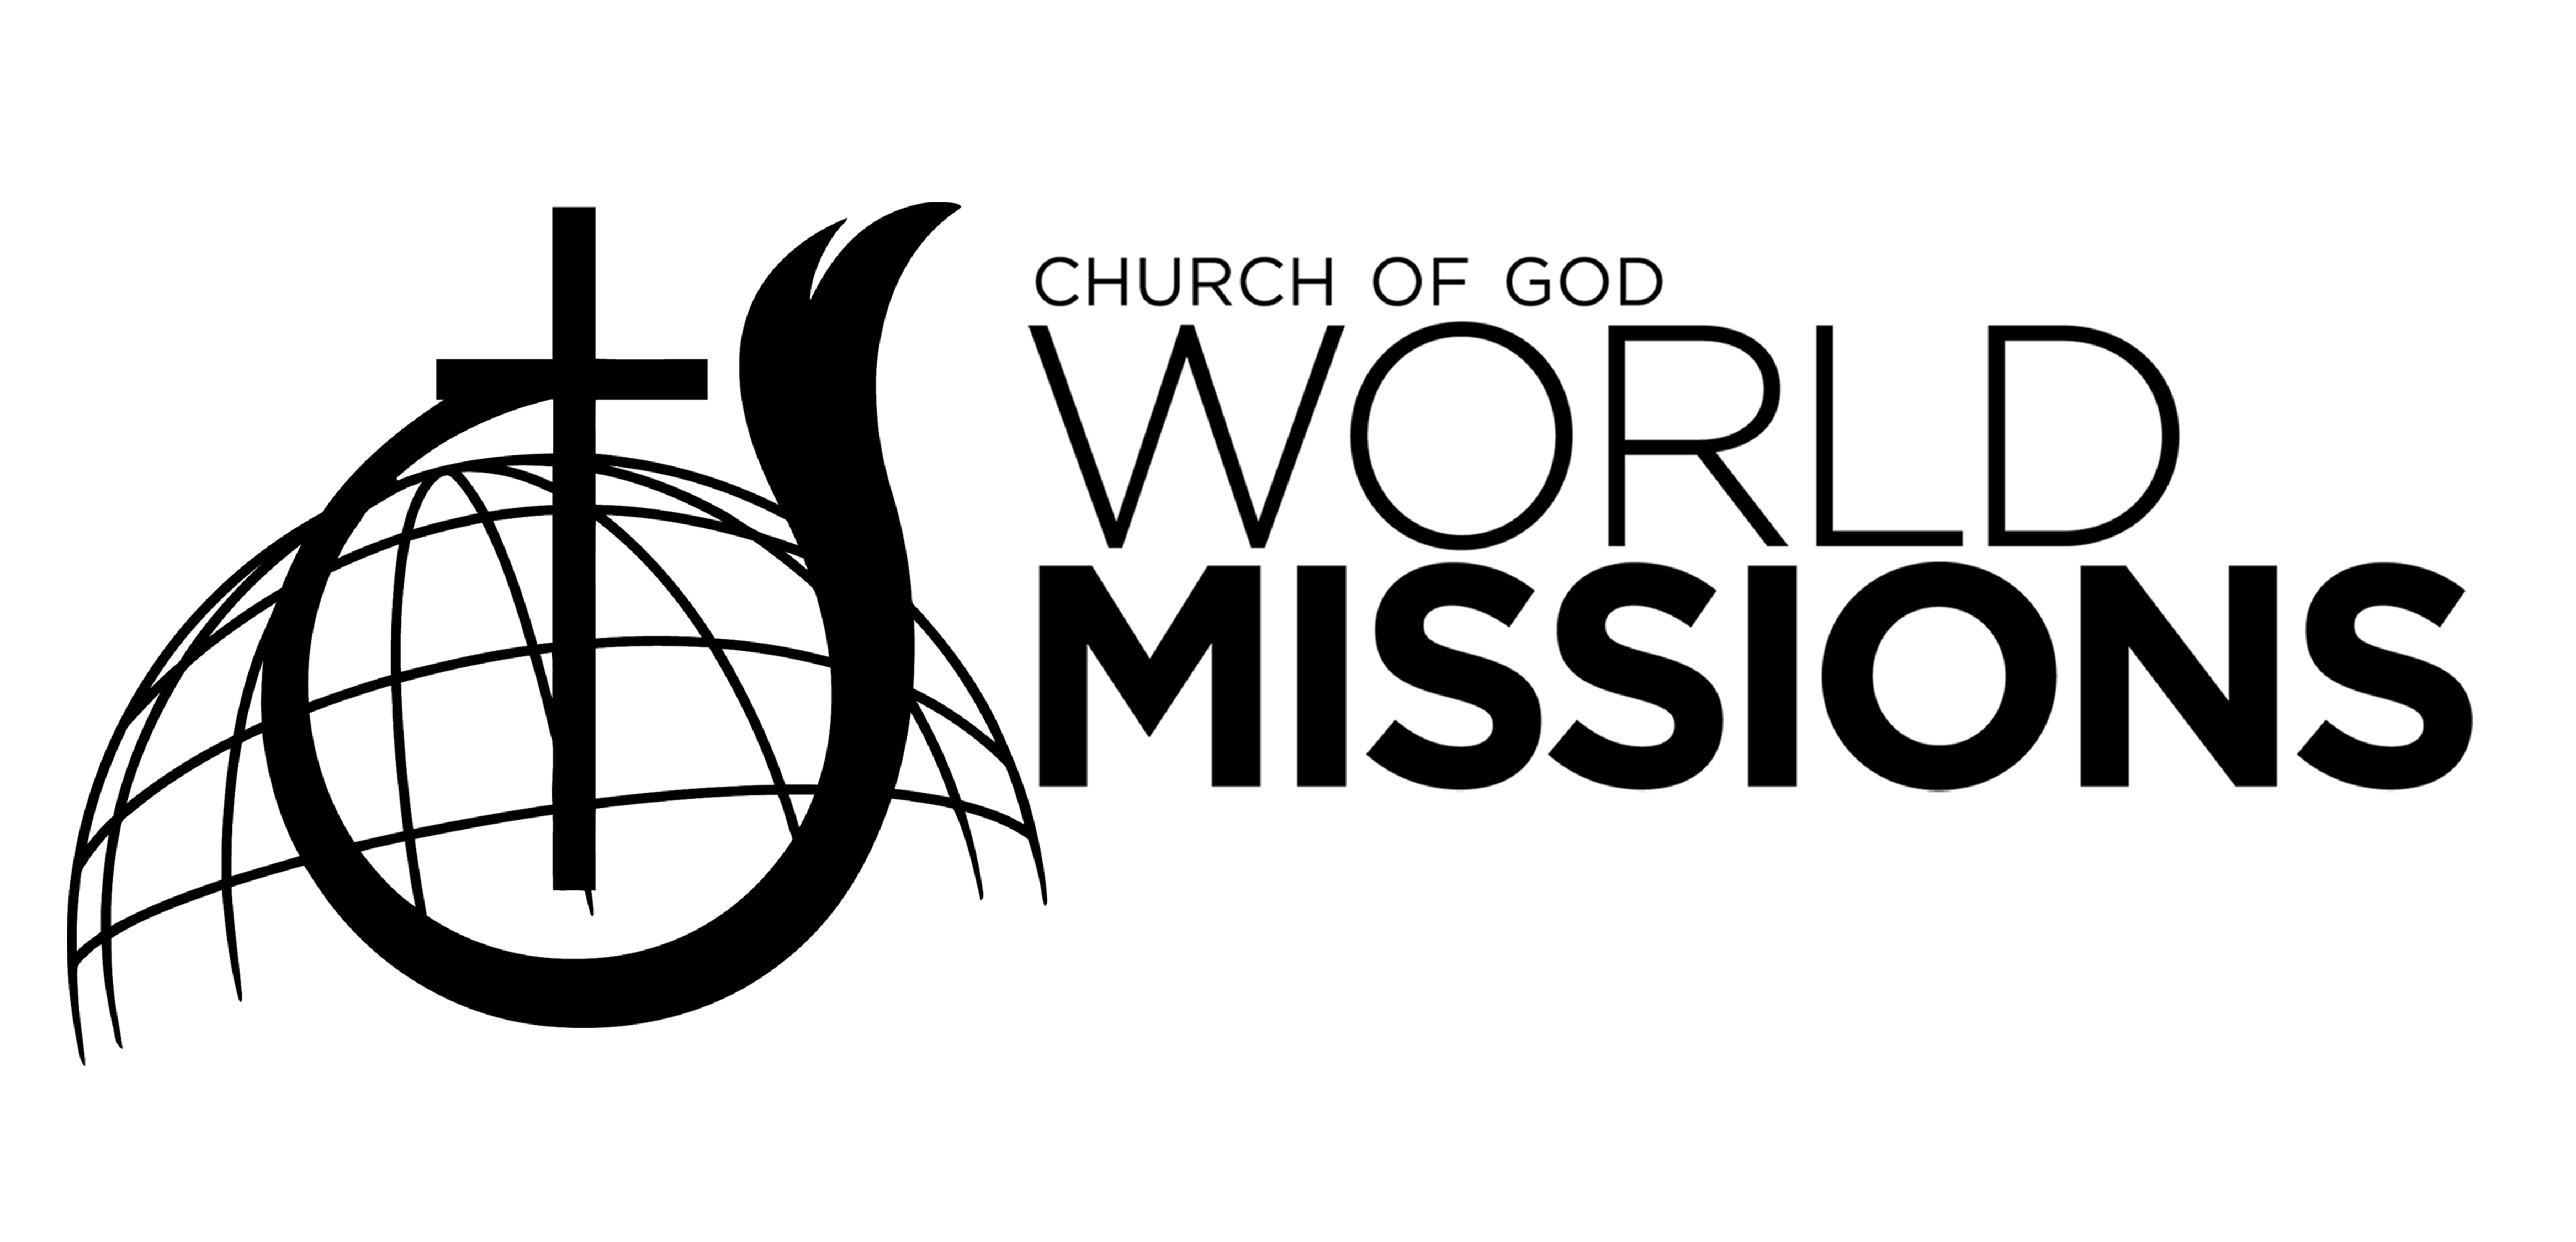 Church of God World Missions logo